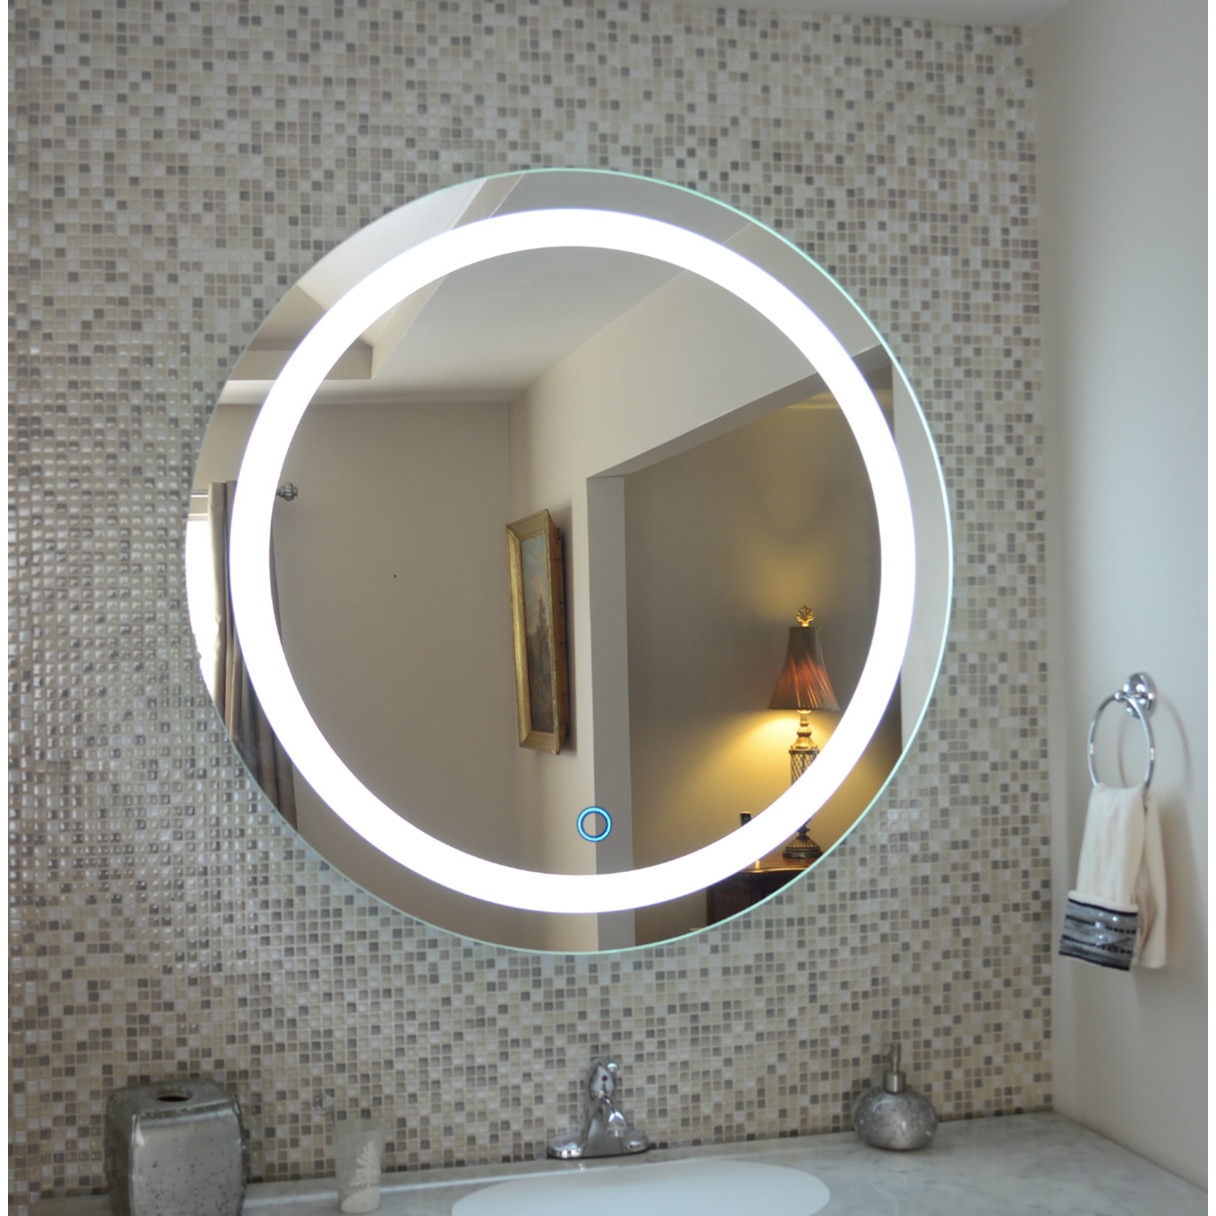 Зеркало настенное led. Esbano es-1192f зеркало. Зеркало "led 1200" с подсветкой. Зеркало с подсветкой Айрон Лайт r-100мм. Зеркало для ванной с подсветкой Айрон Лайт.